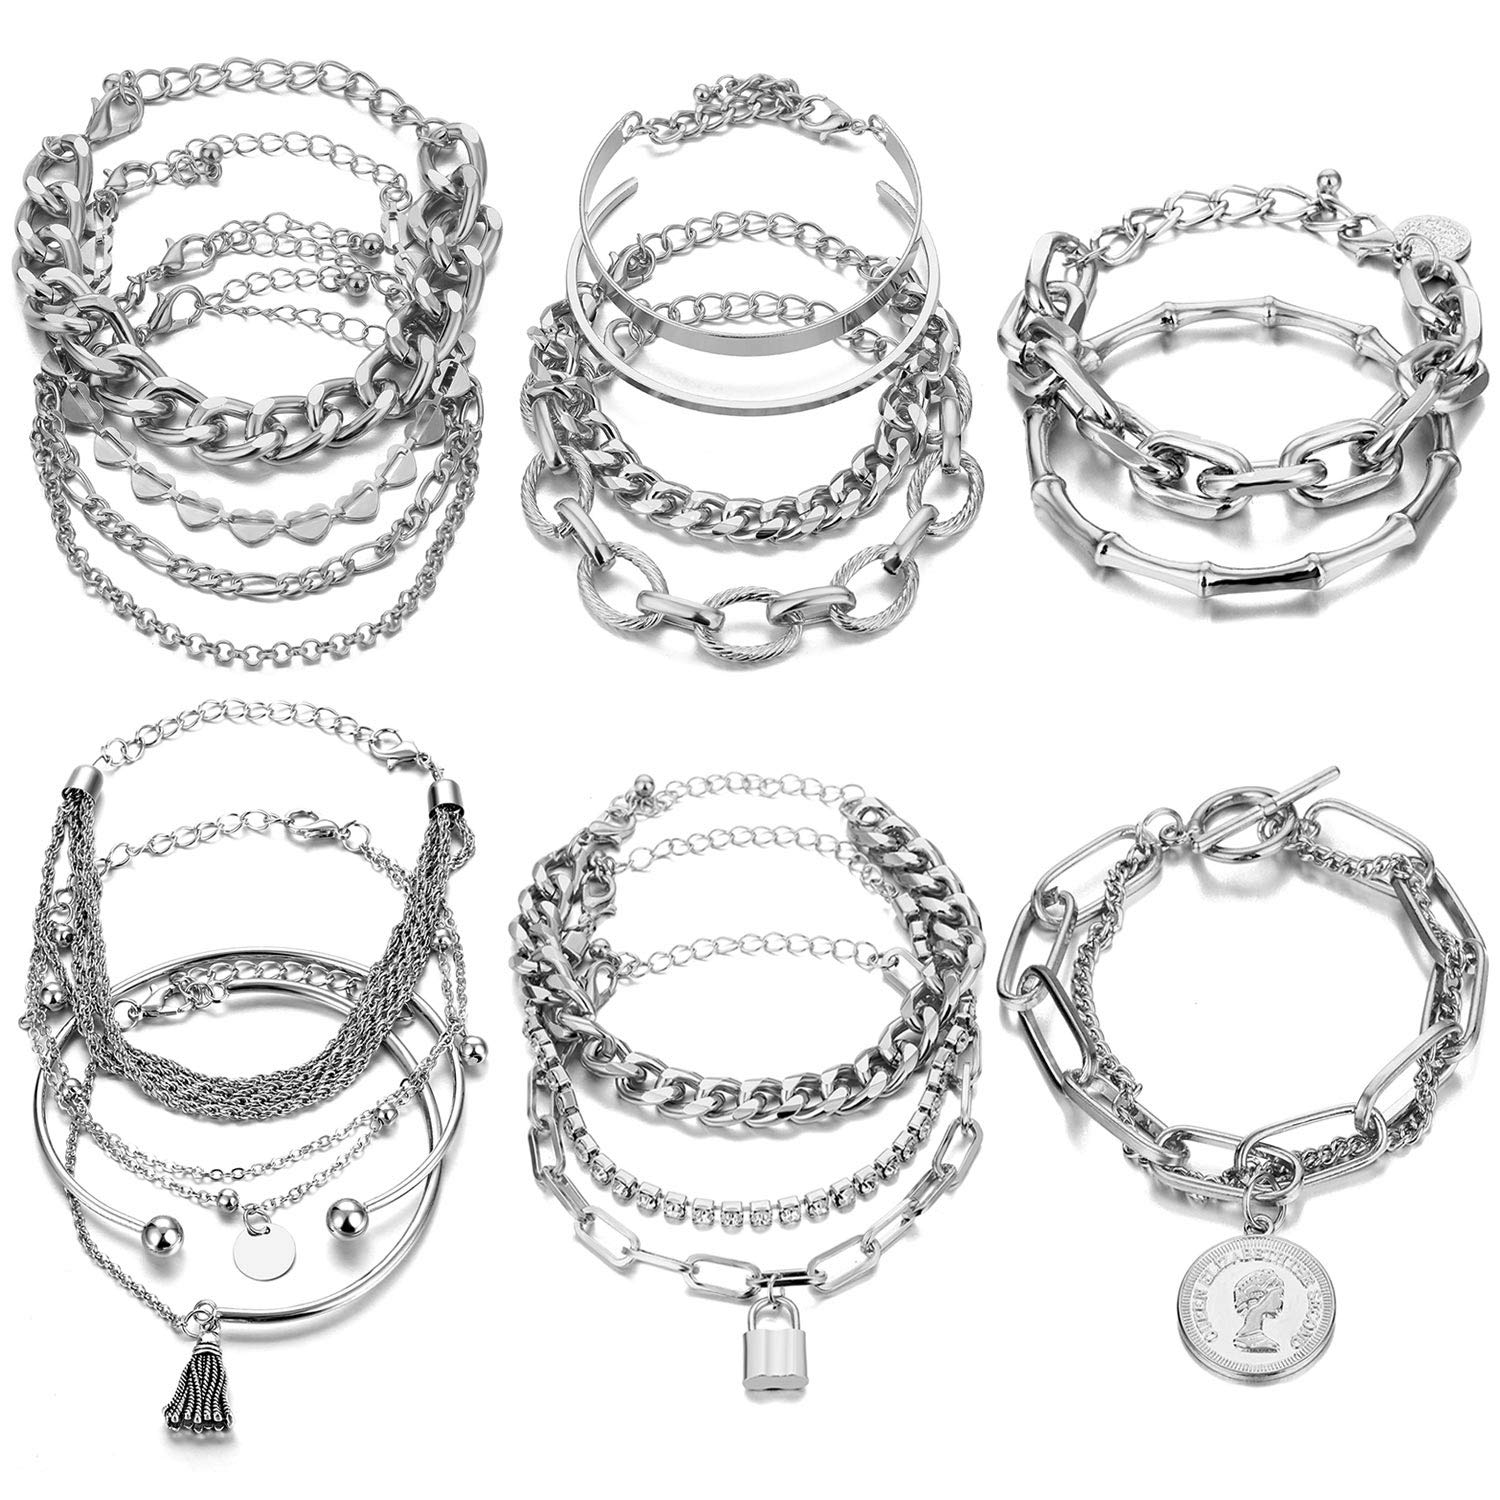 Curv Silver Bracelet For Women – The Silver Essence